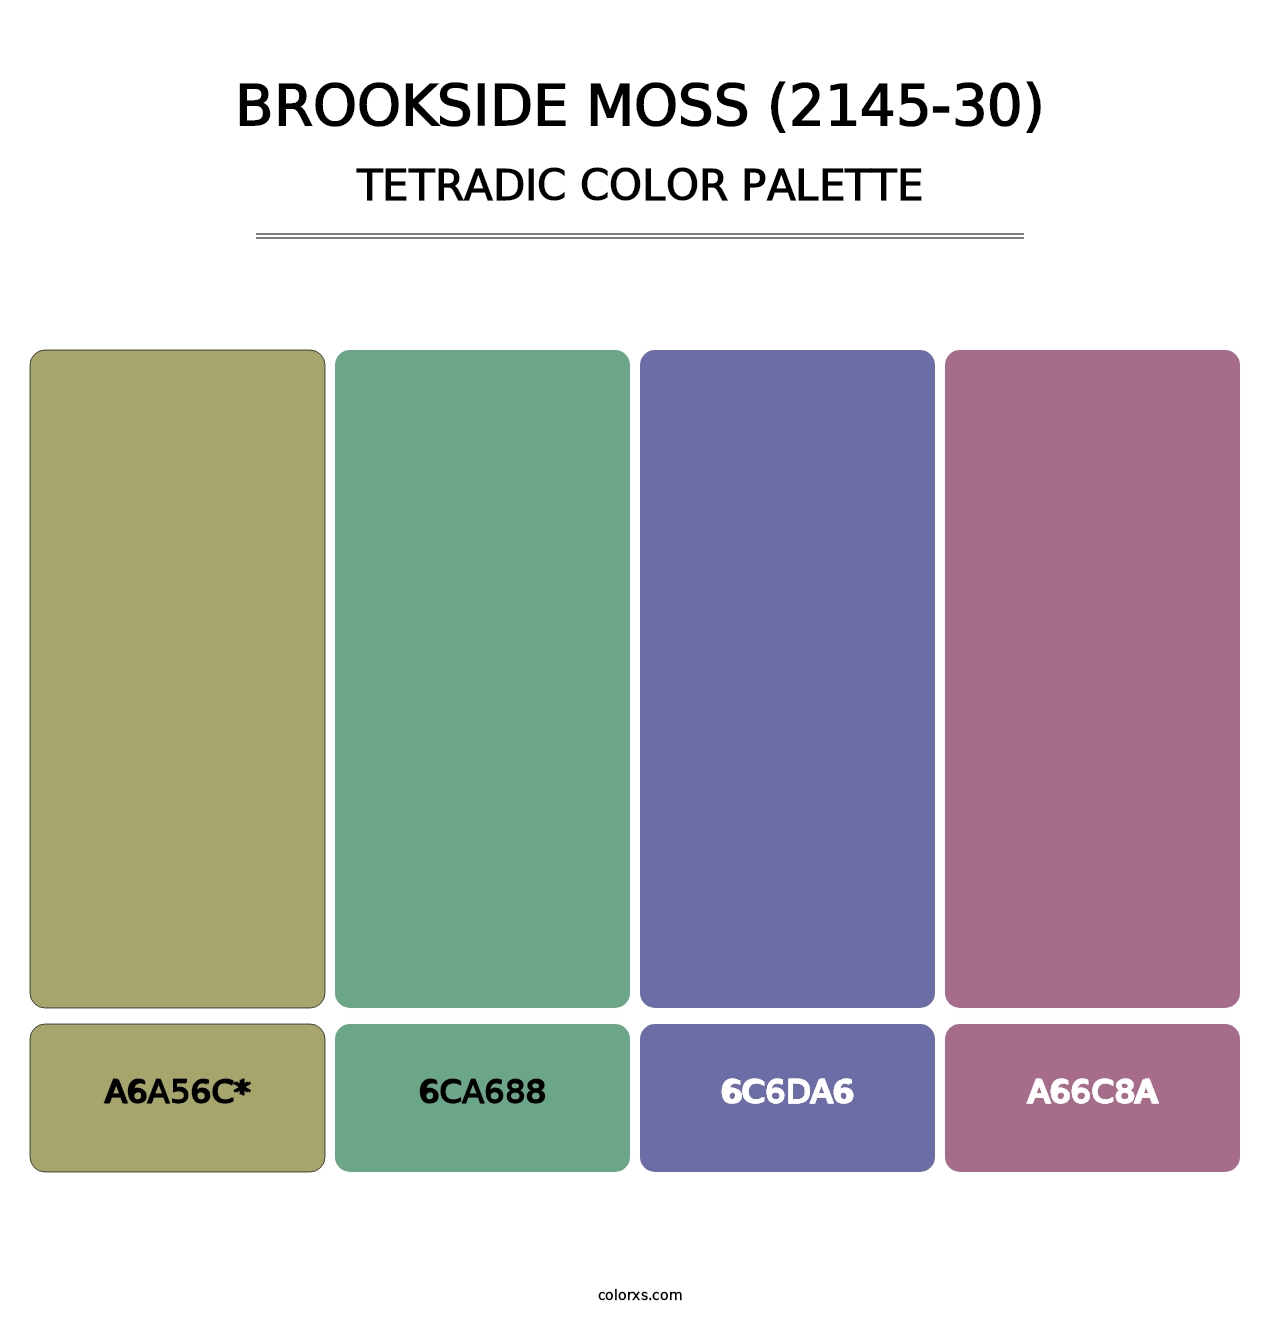 Brookside Moss (2145-30) - Tetradic Color Palette